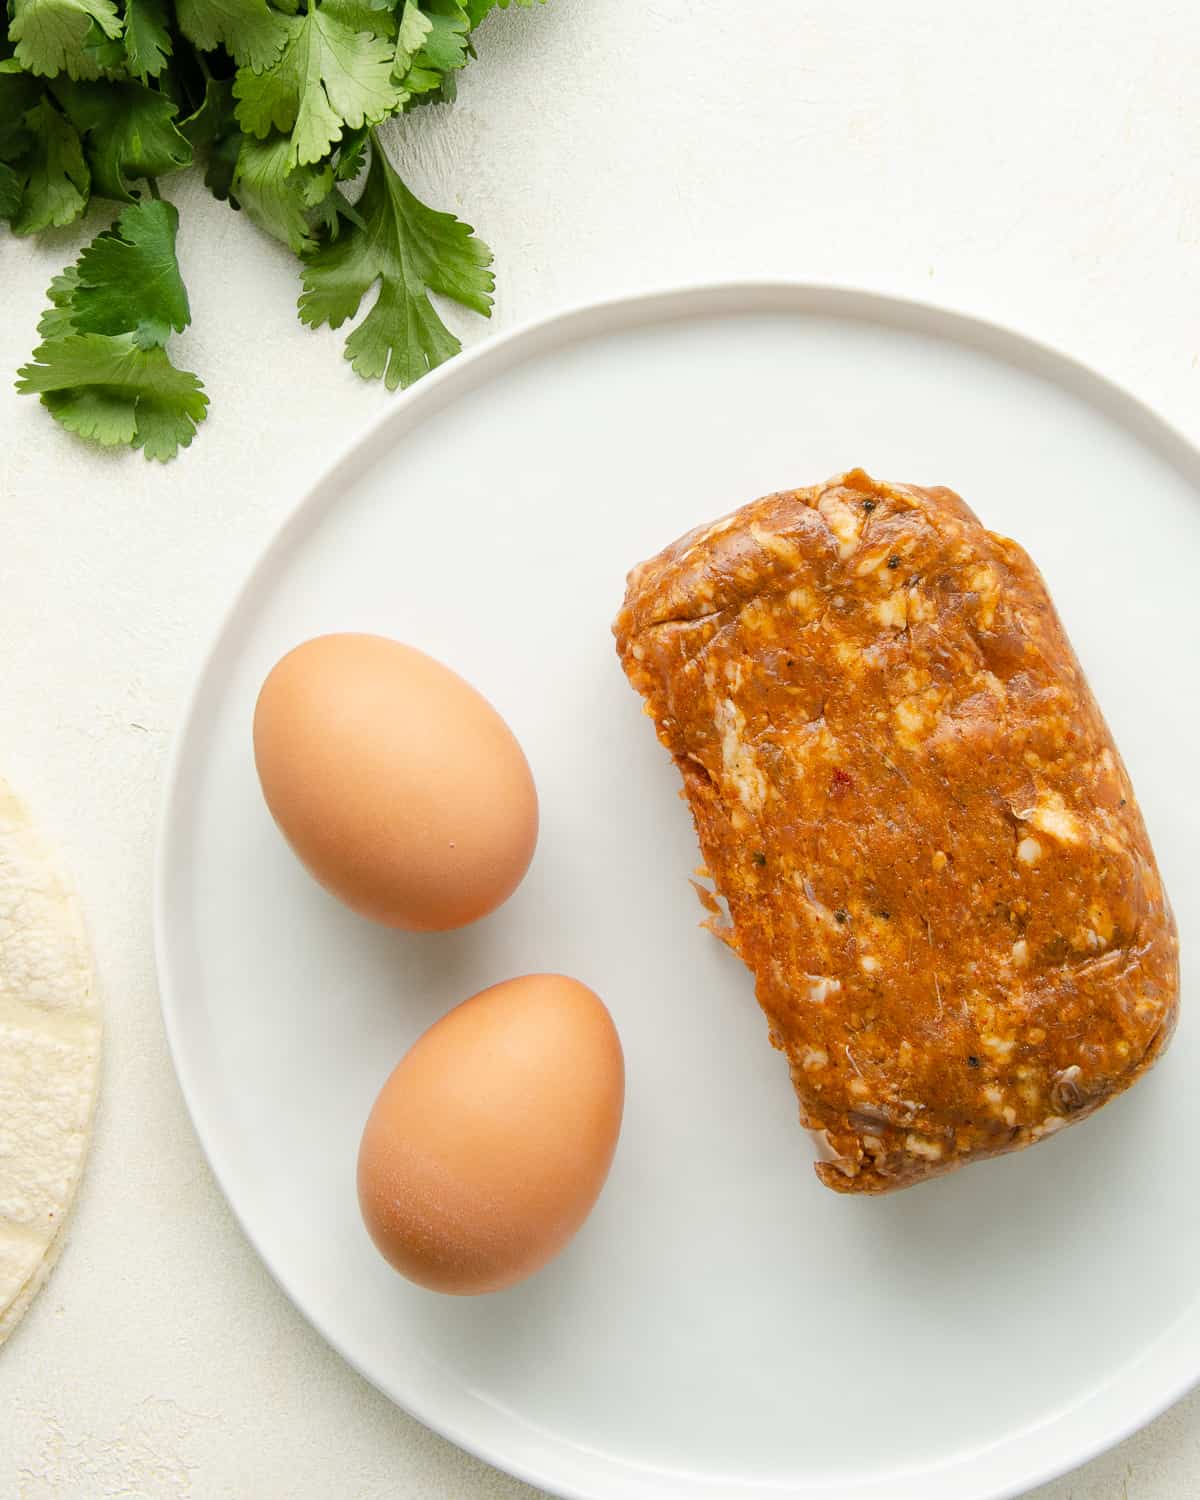 Ingredients to make huevos con chorizo, eggs and chorizo sausage.